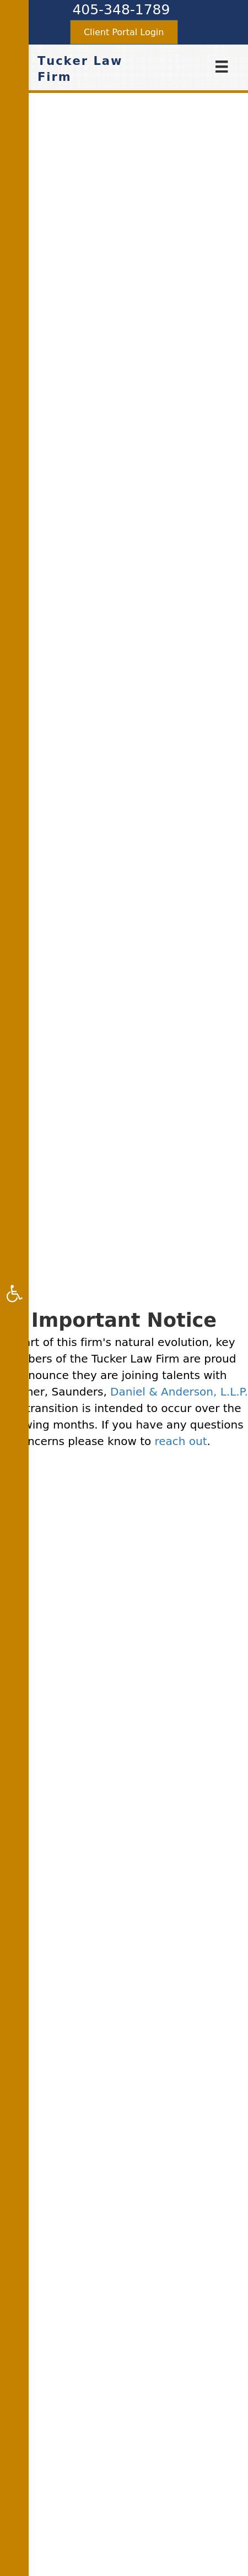 Tucker, Phillip J - Edmond OK Lawyers